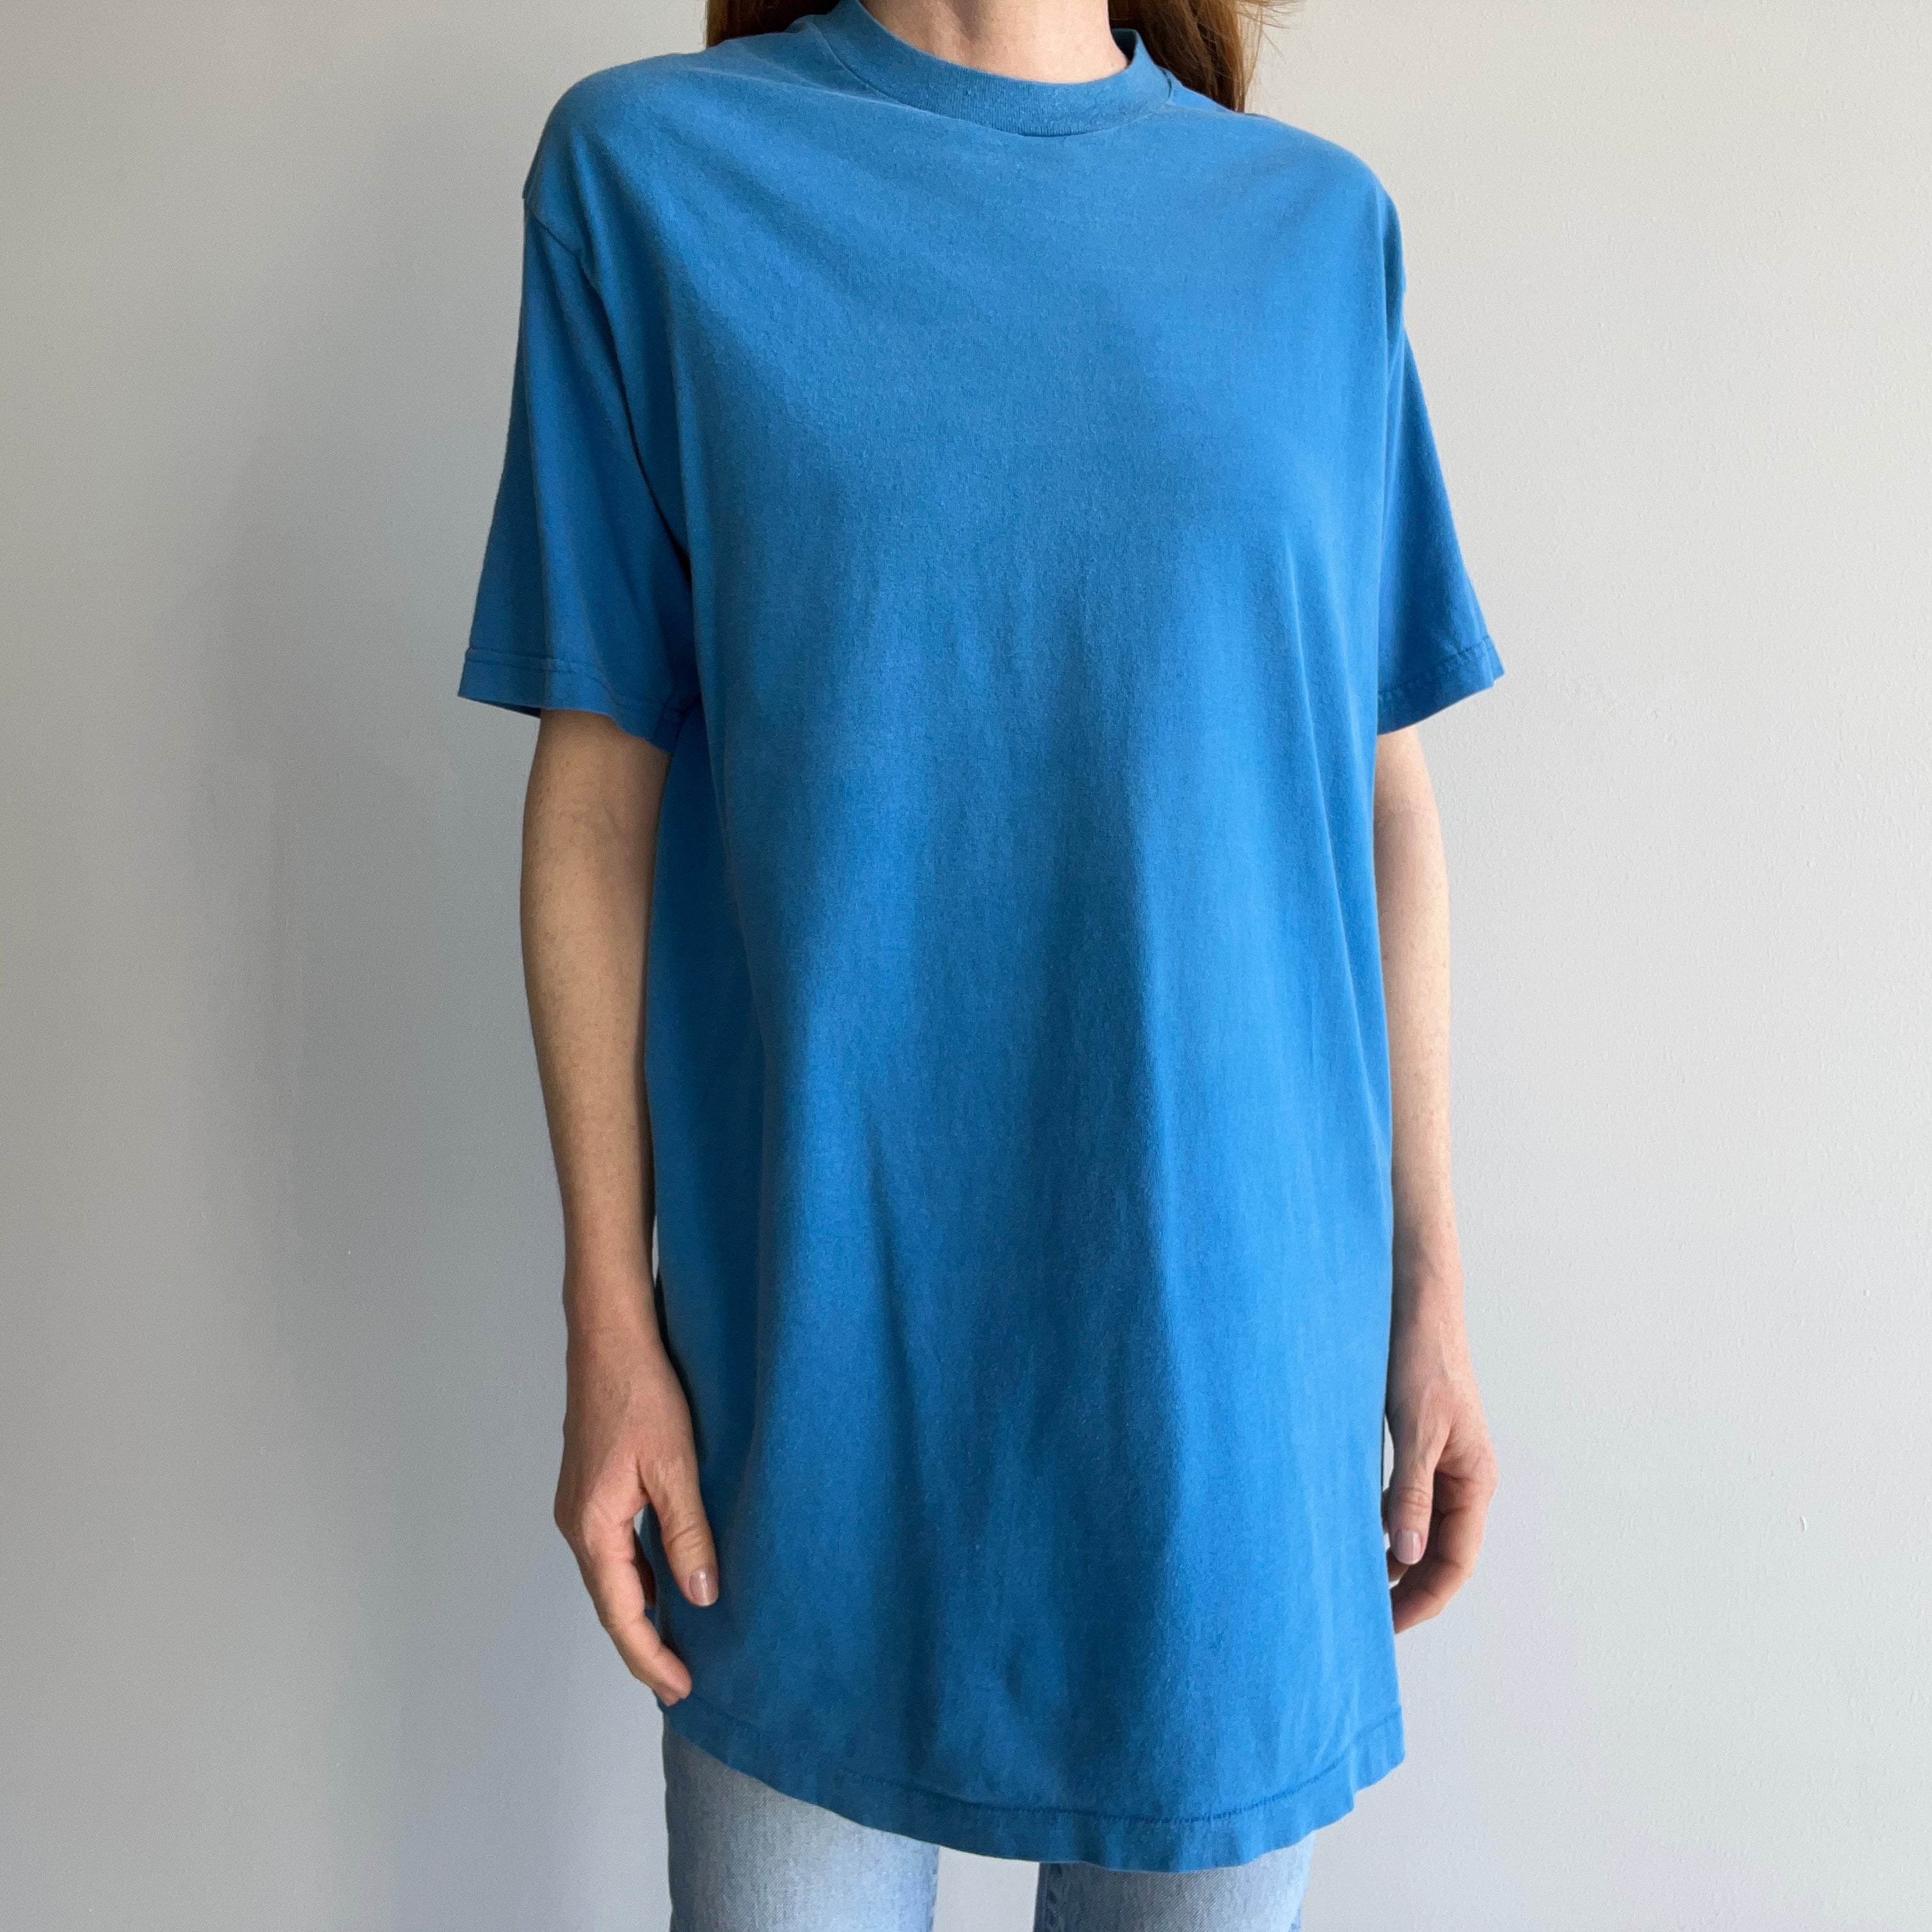 1980s Silky Soft Extra Long Best Blue Cotton T-Shirt